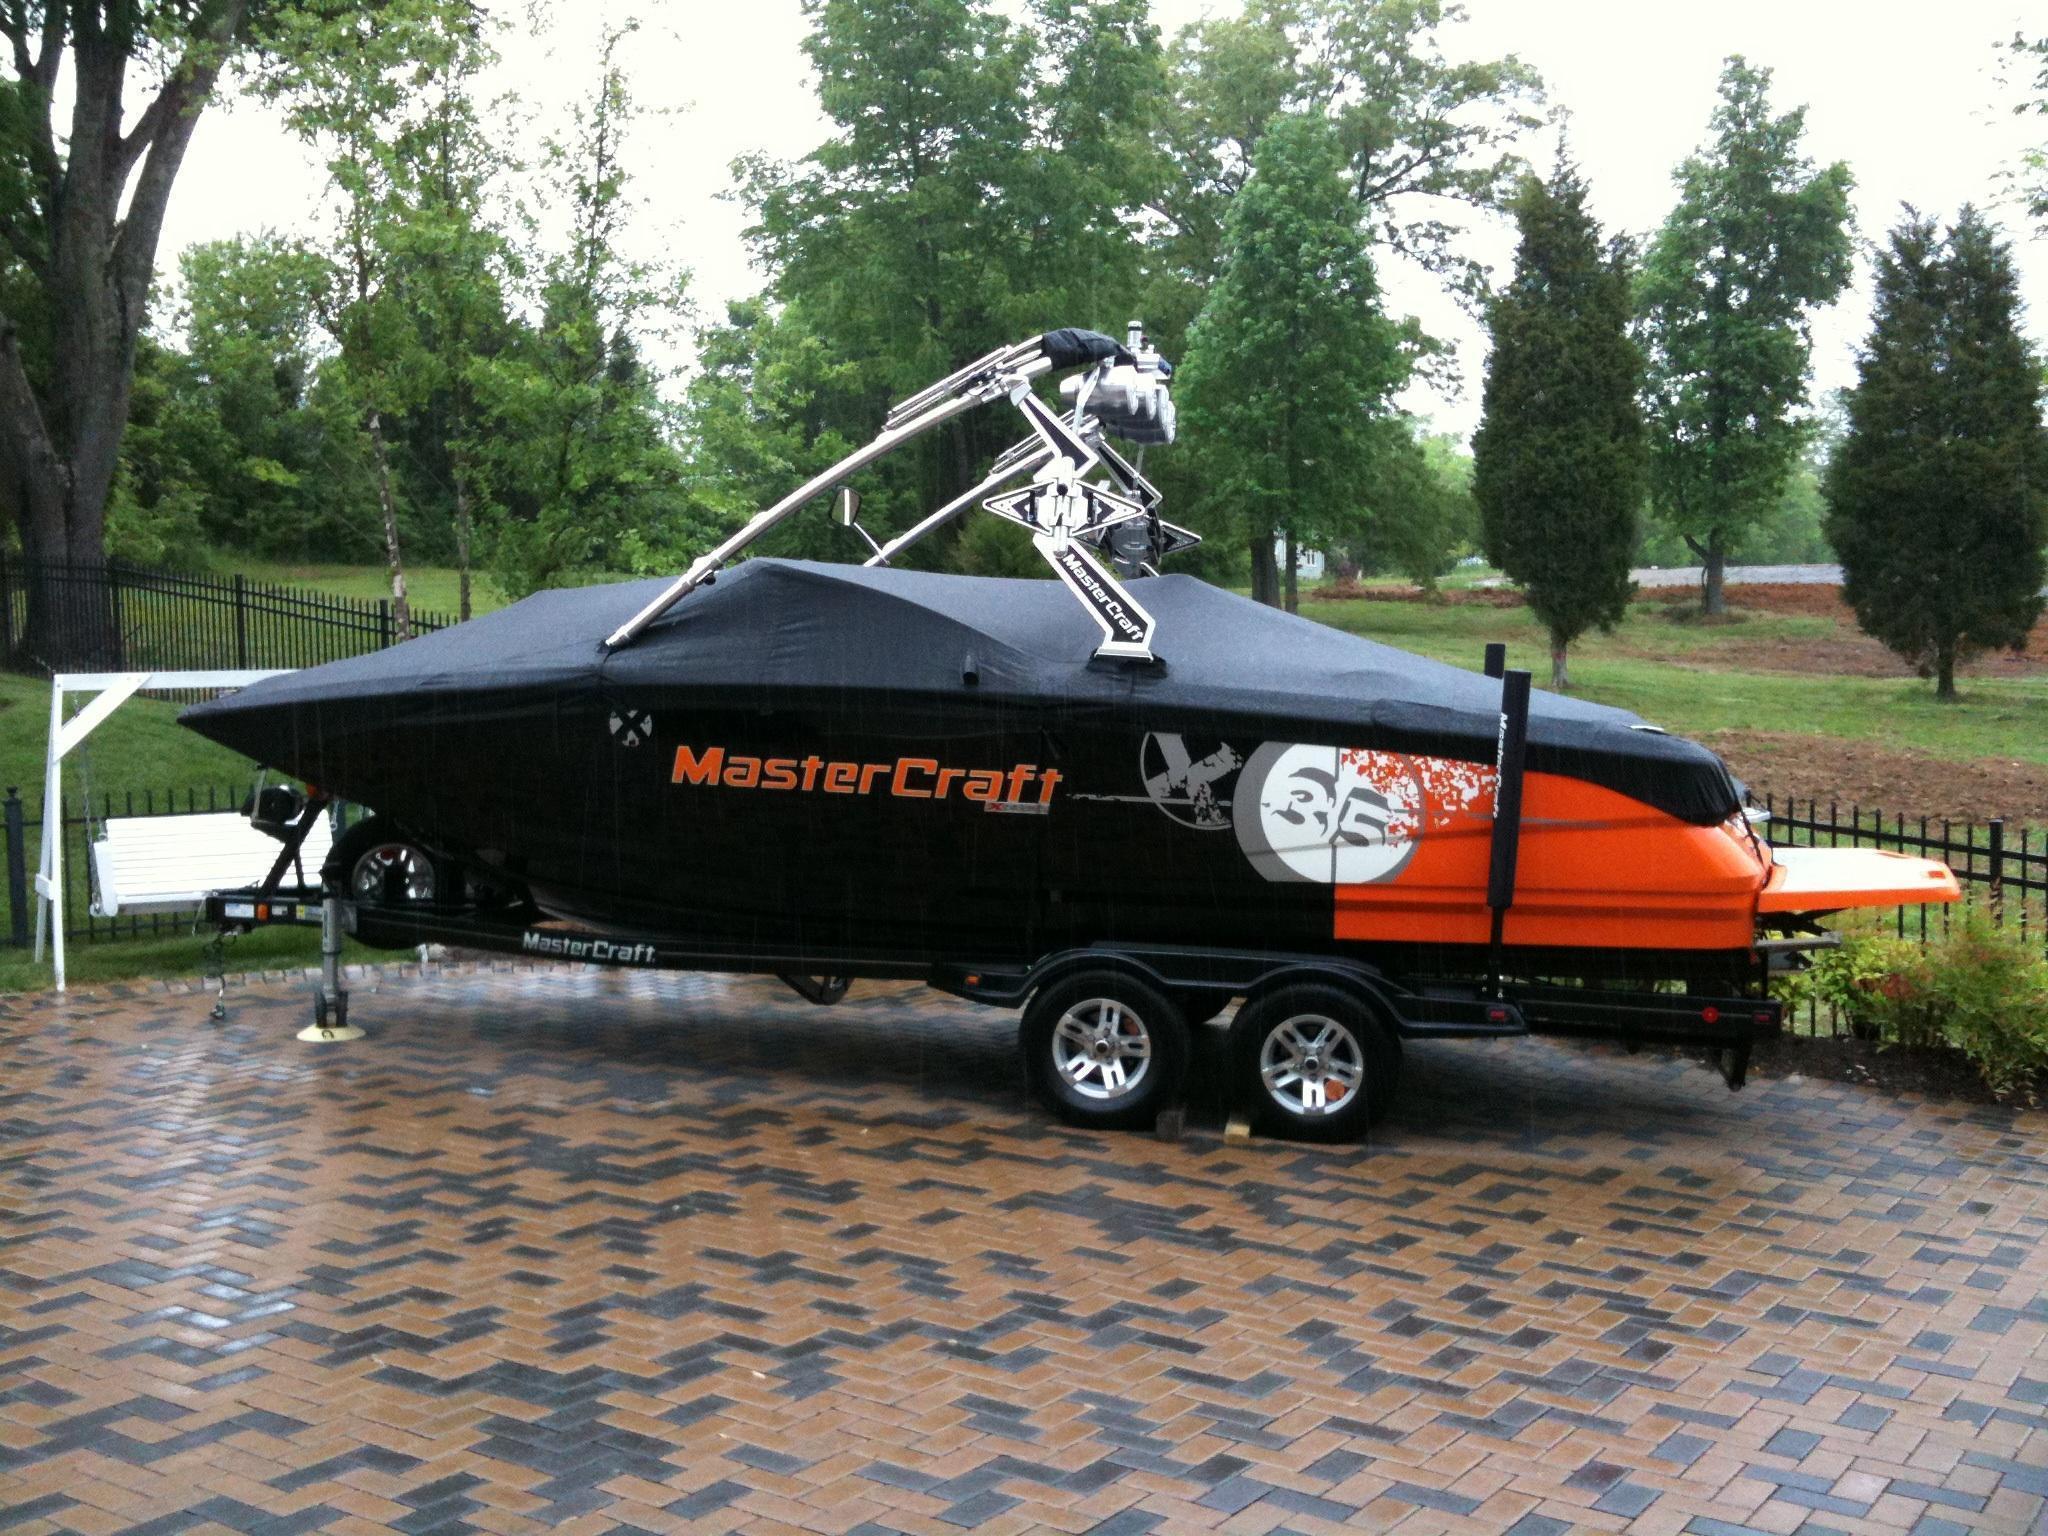 Mastercraft X-35, Knoxville